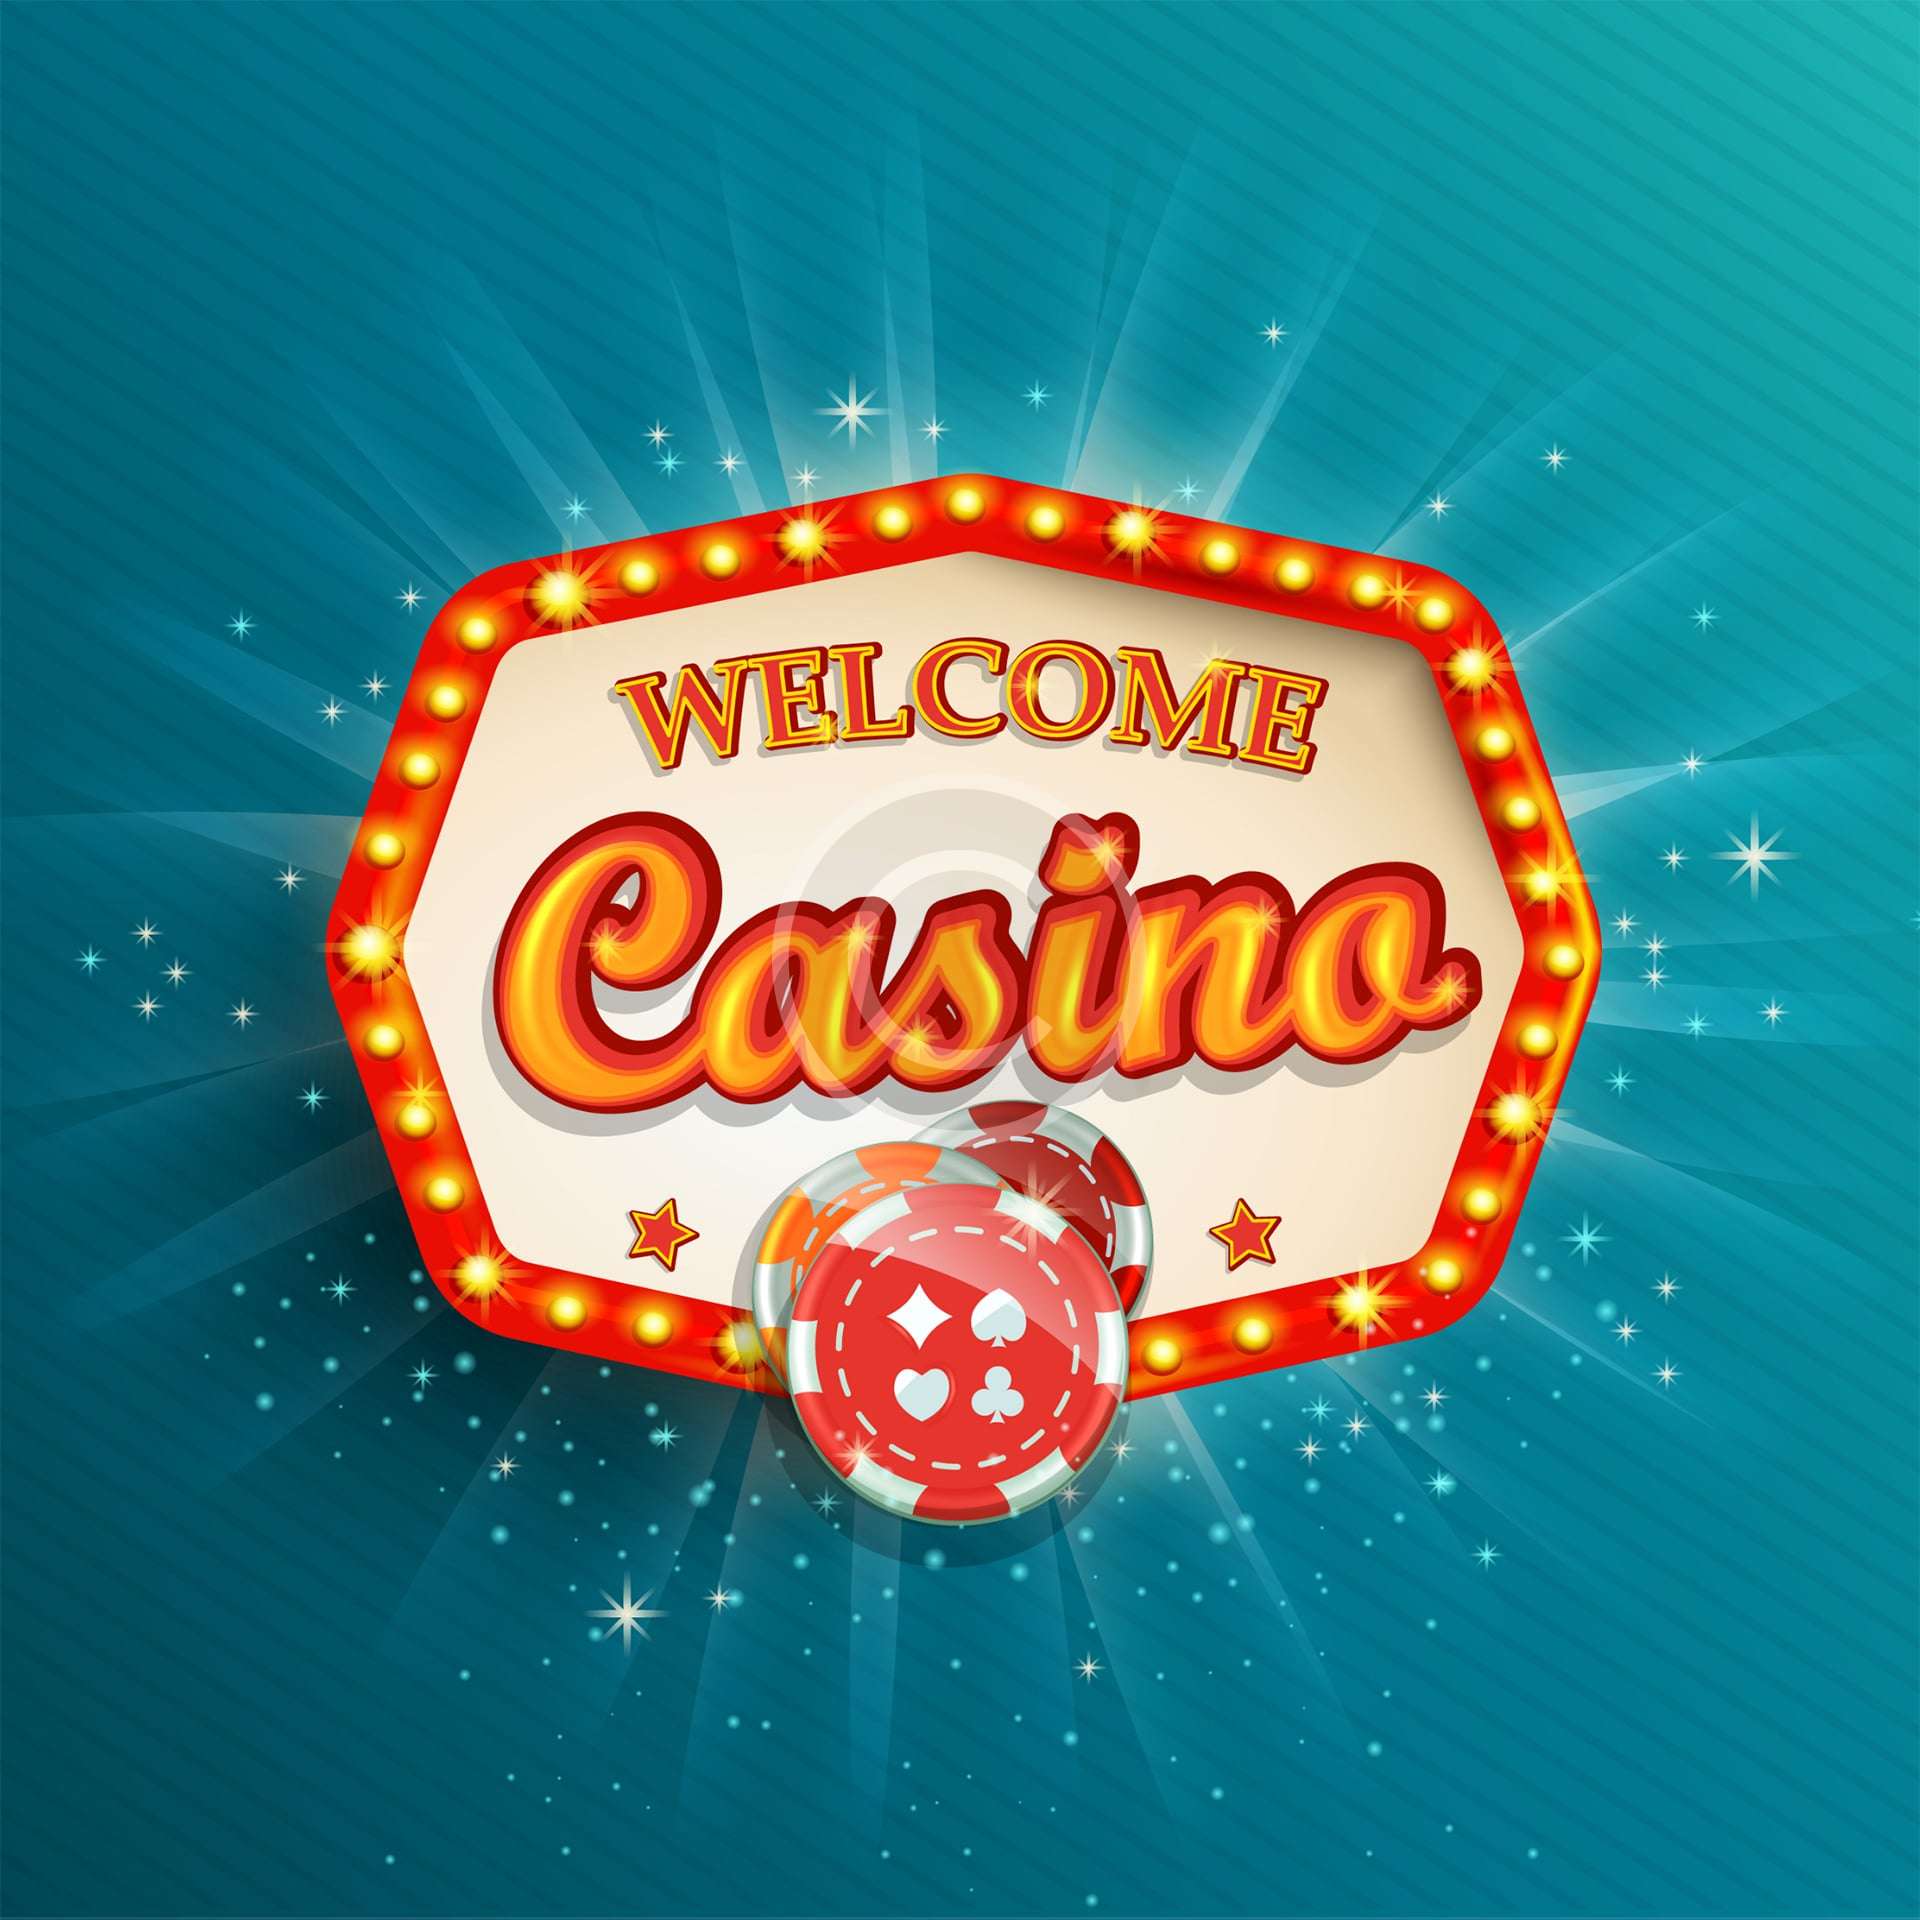 The Joy Casino